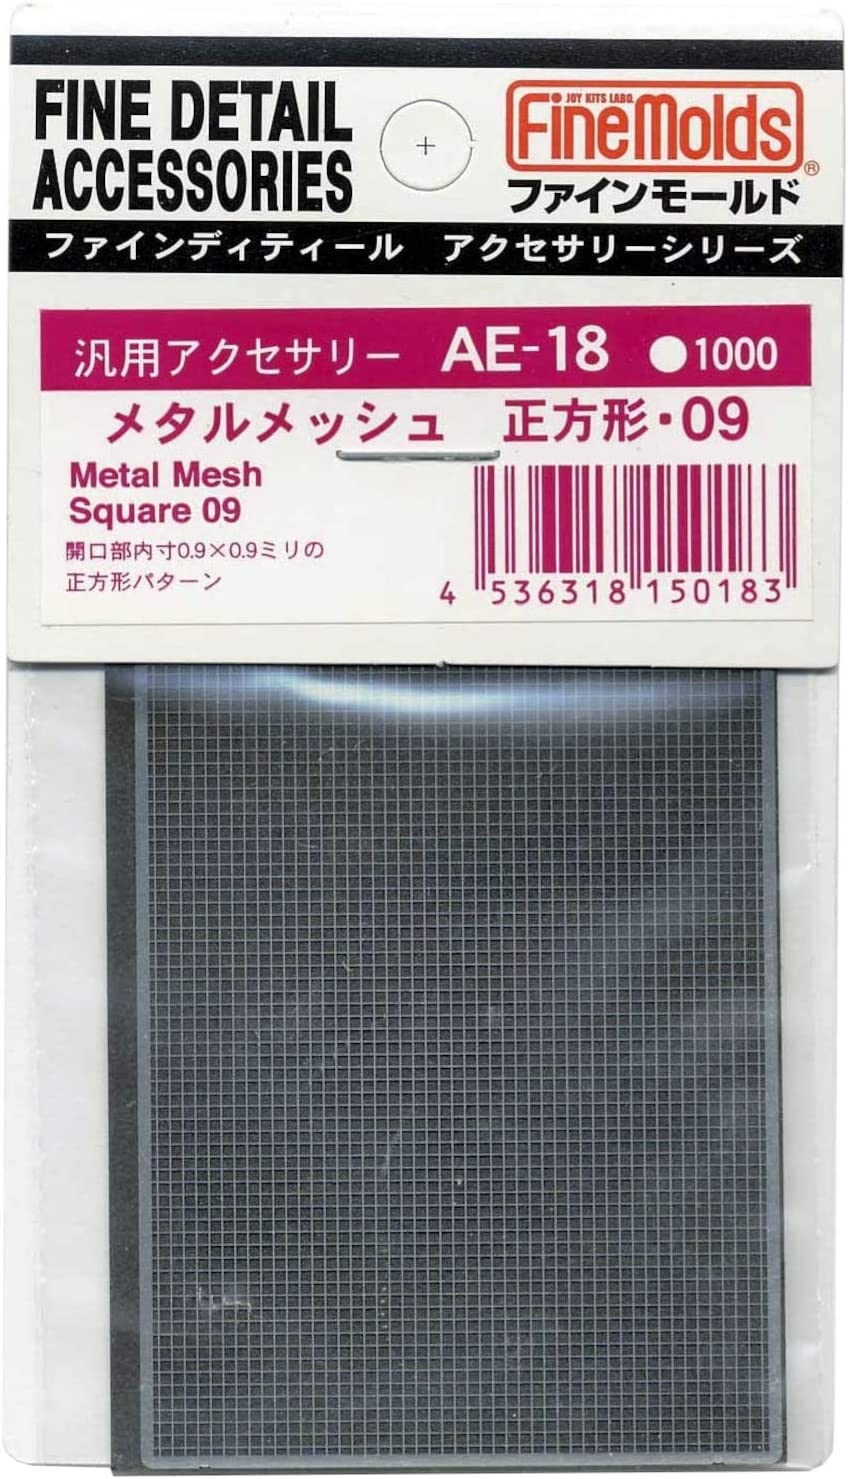 Metal Mesh Square 09